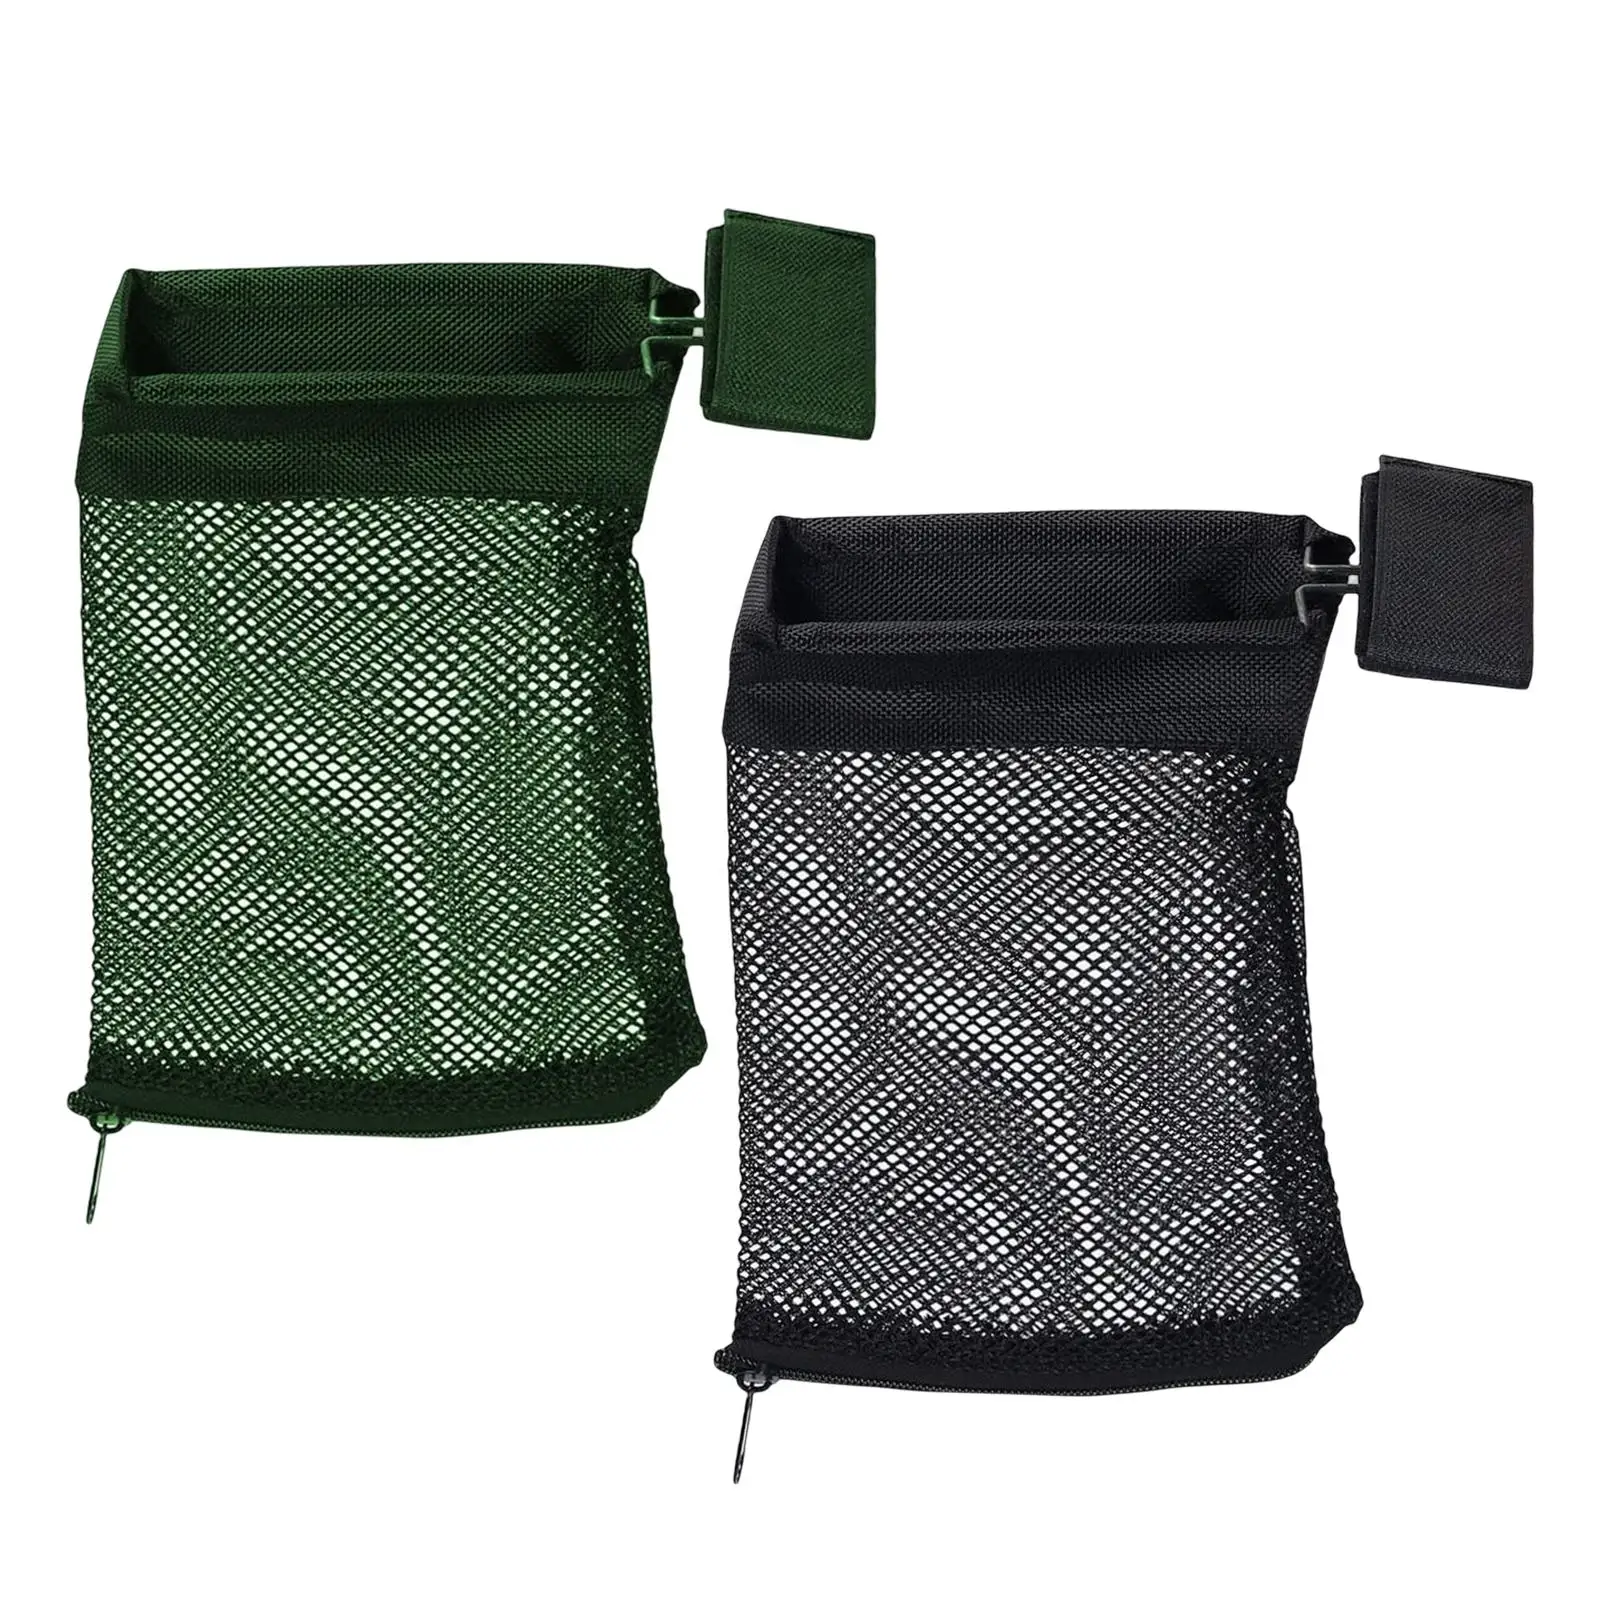 Recycled Bag Holder Lightweight Organizer Storage Bag for Camp Travel